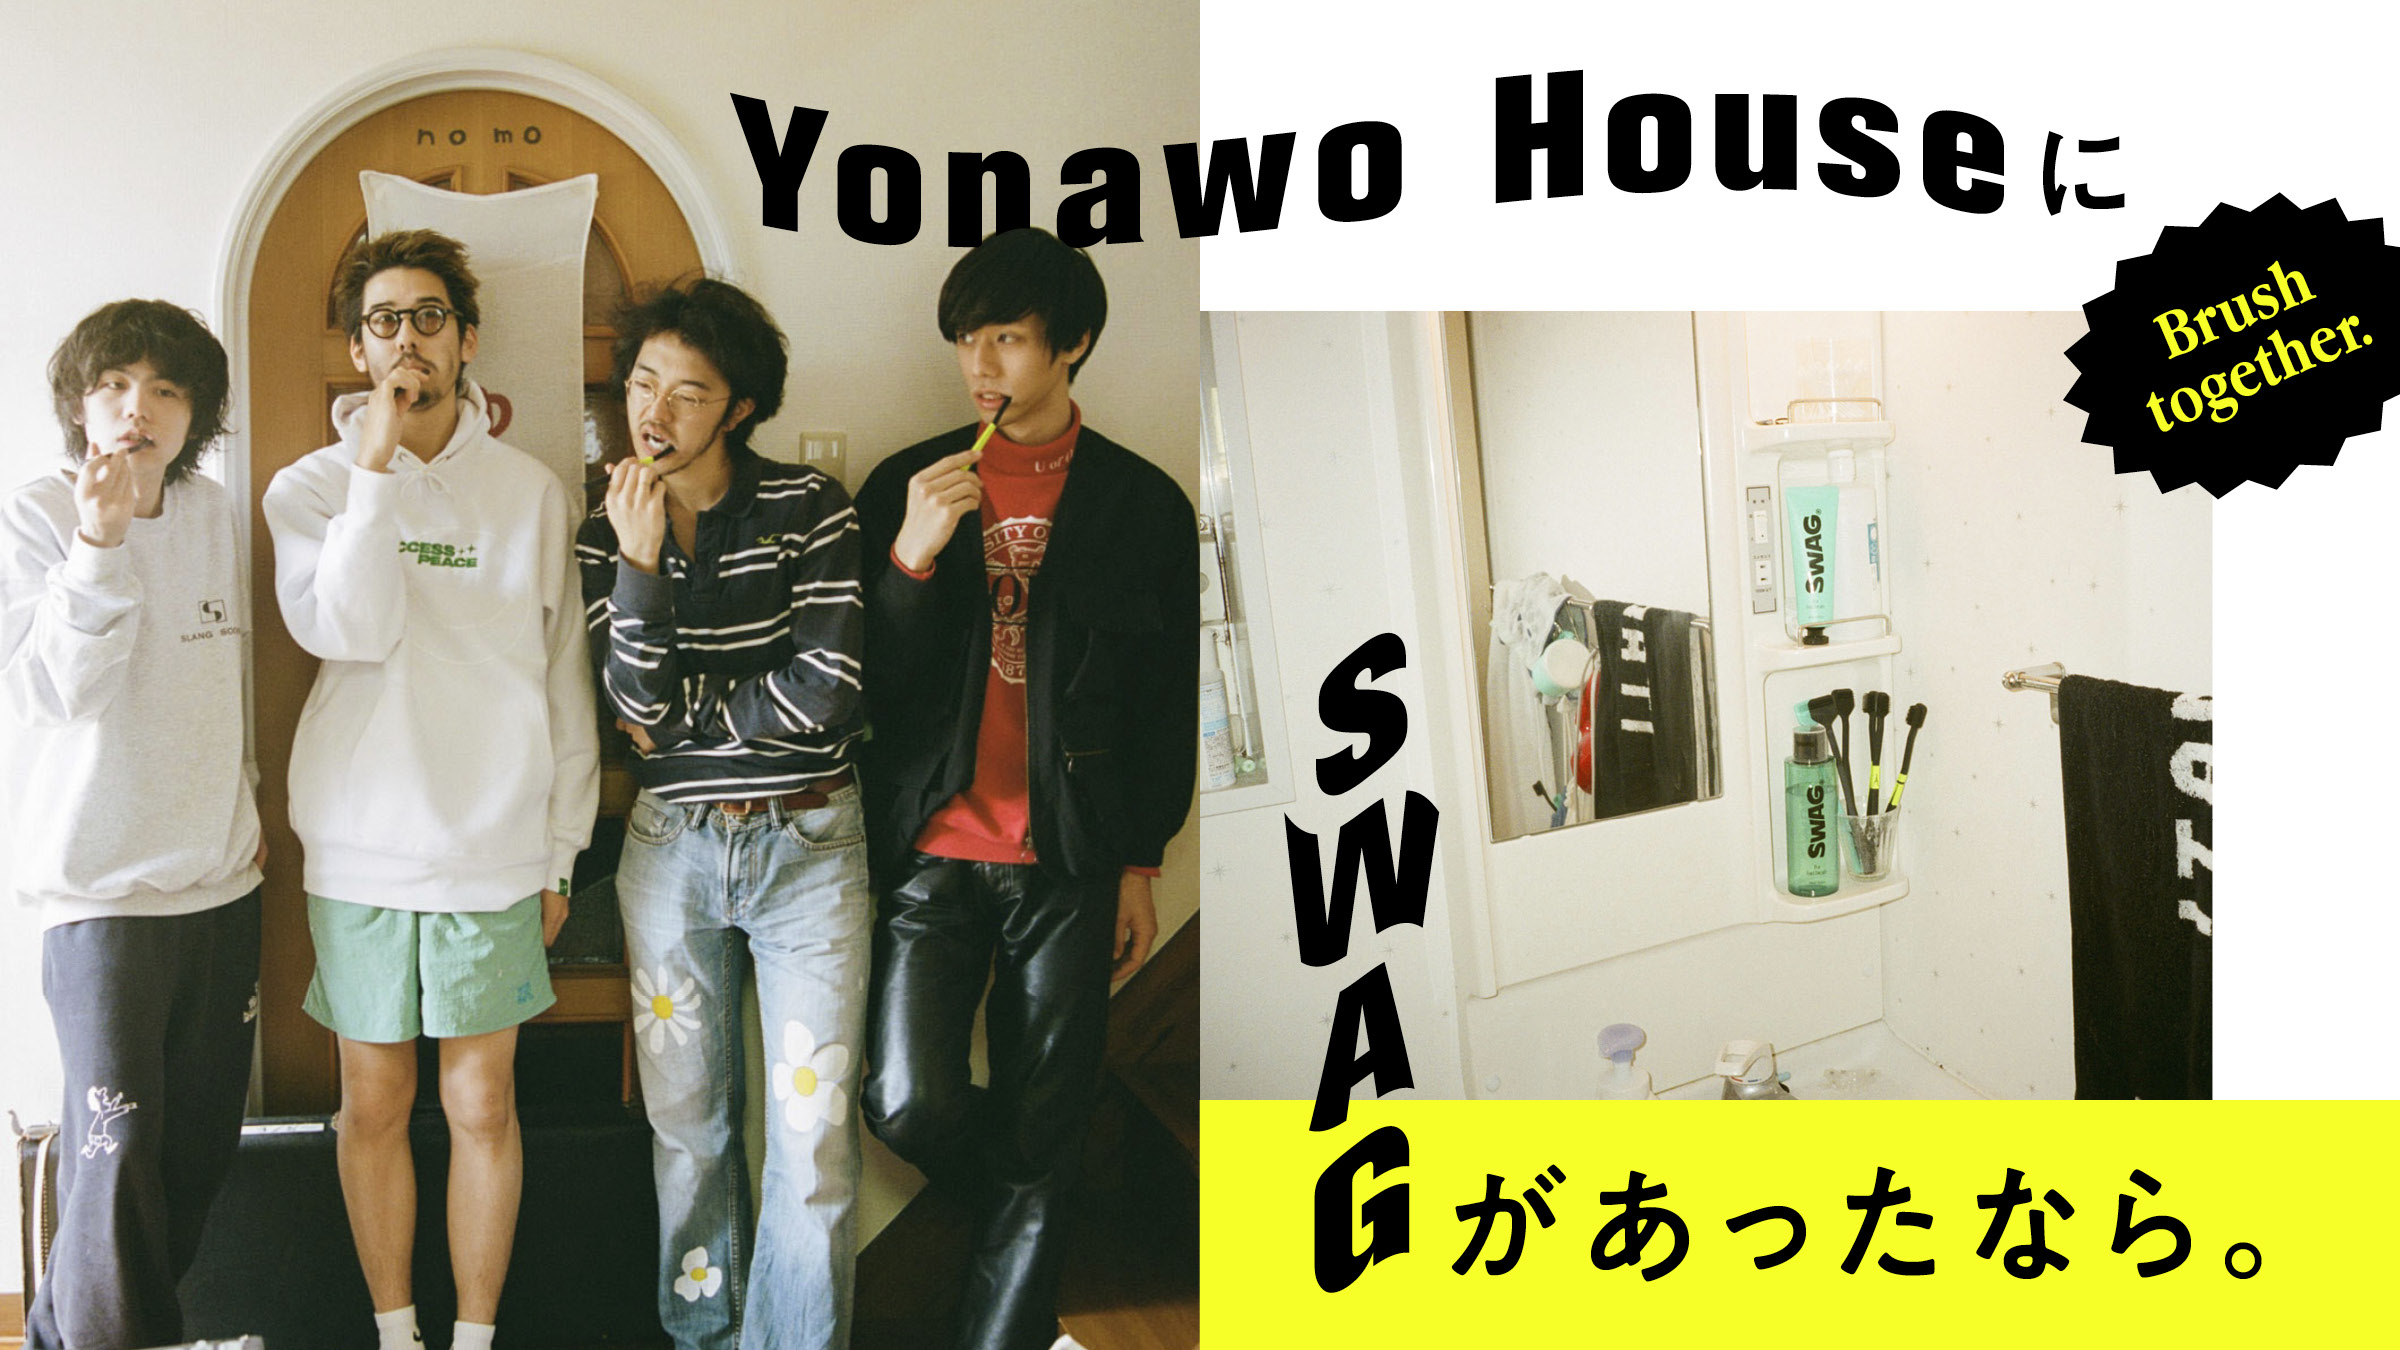 Yonawo HouseにSWAGがあったなら。